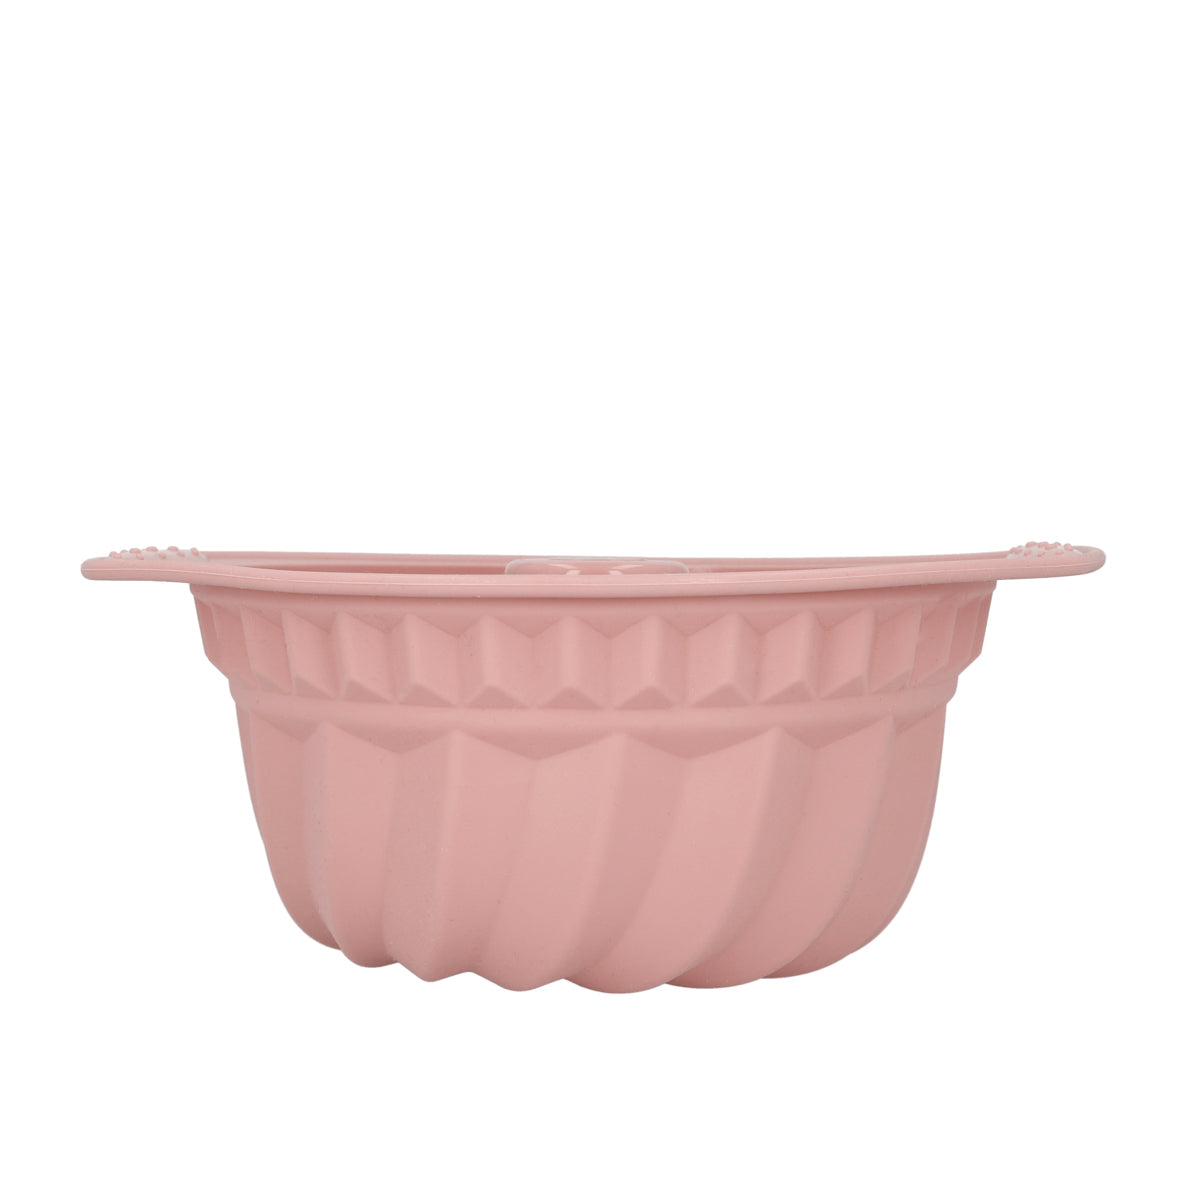 EINFACHES BACKEN | Silikon-Muffinform rosa | 24x10cm | 987681